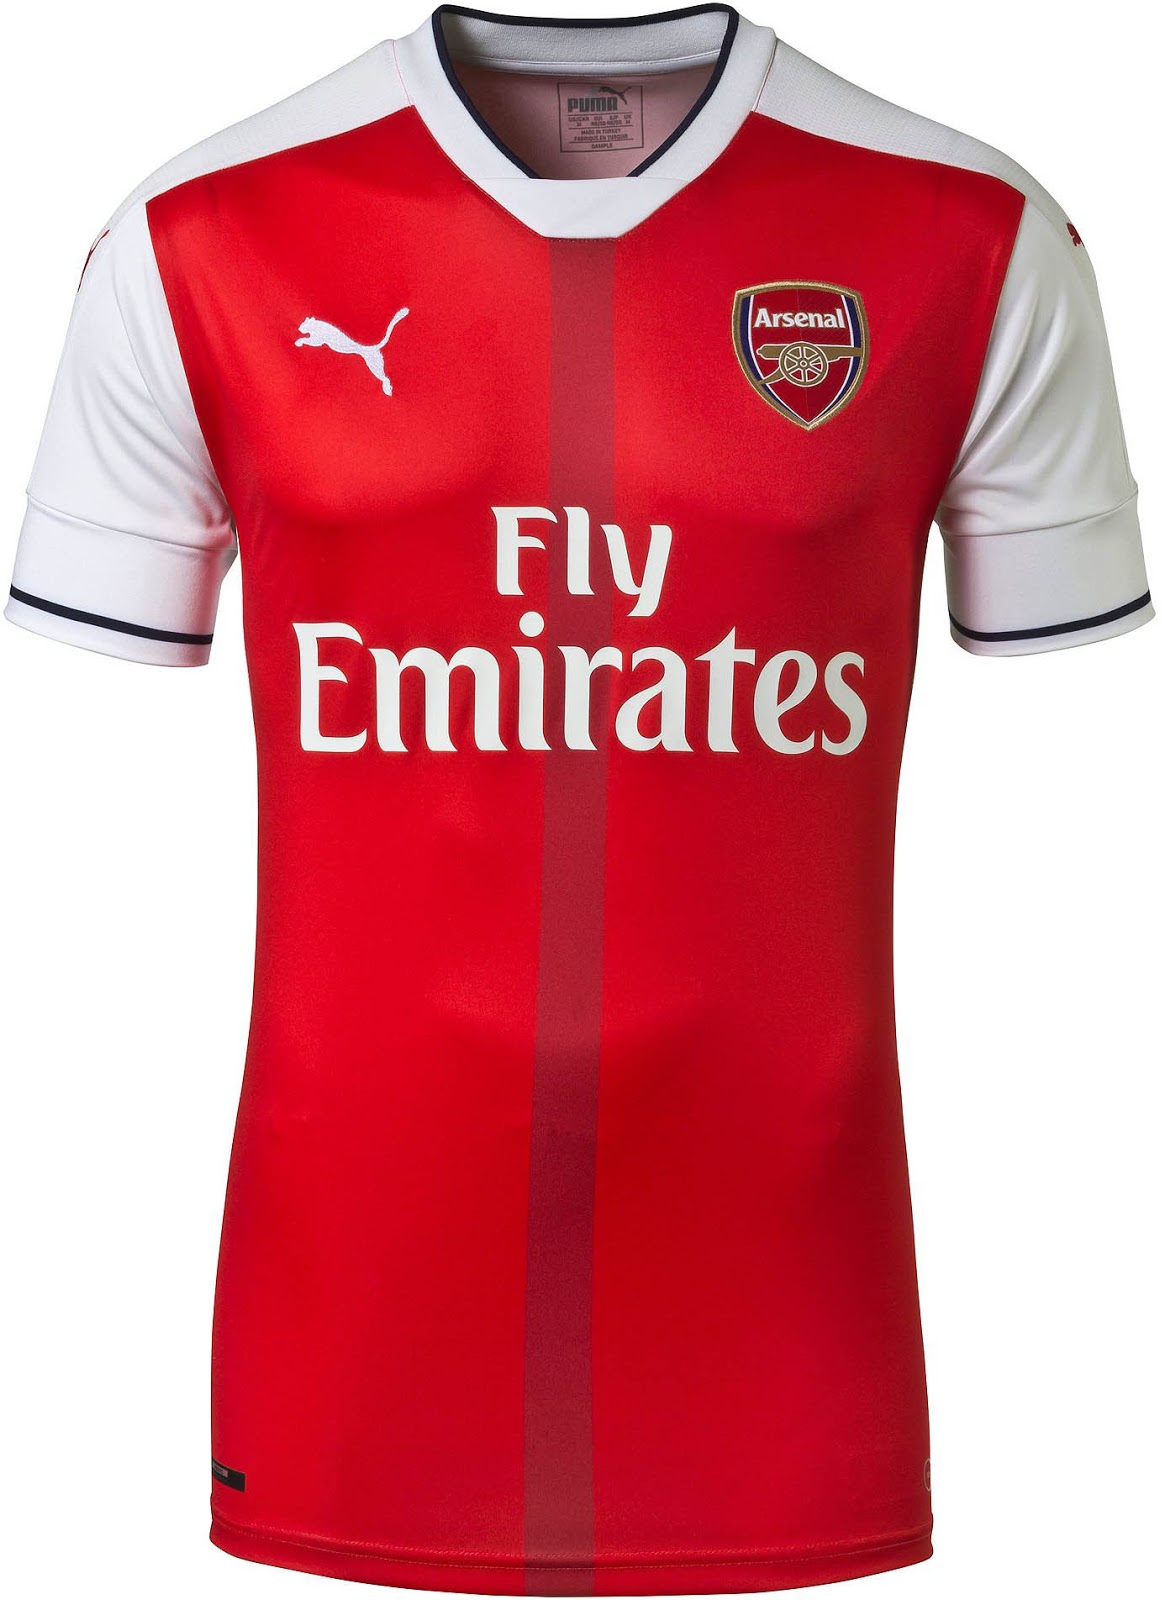 Arsenal-16-17-kit%2B%25282%2529.jpg